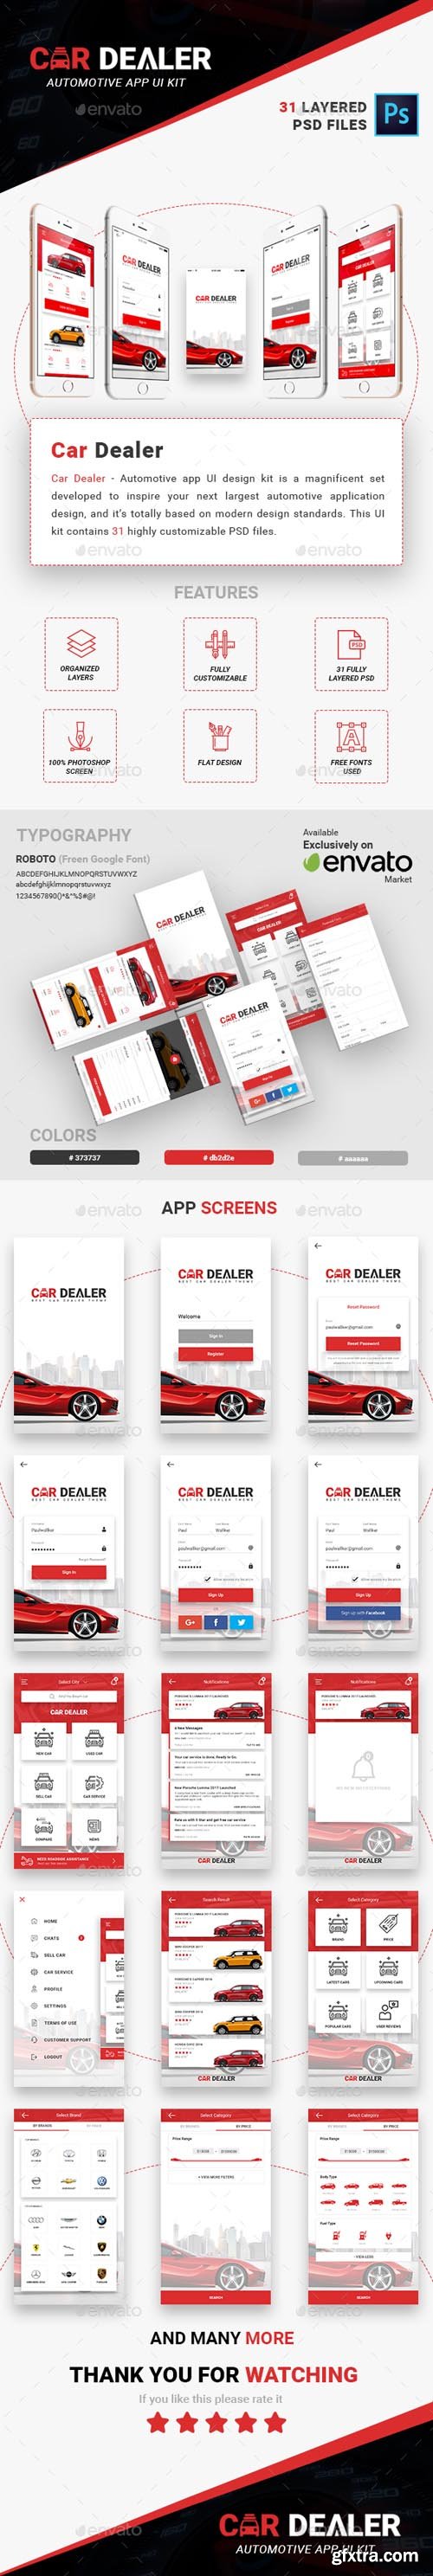 GR - Car Dealer - Automotive App UI Kit 20498744